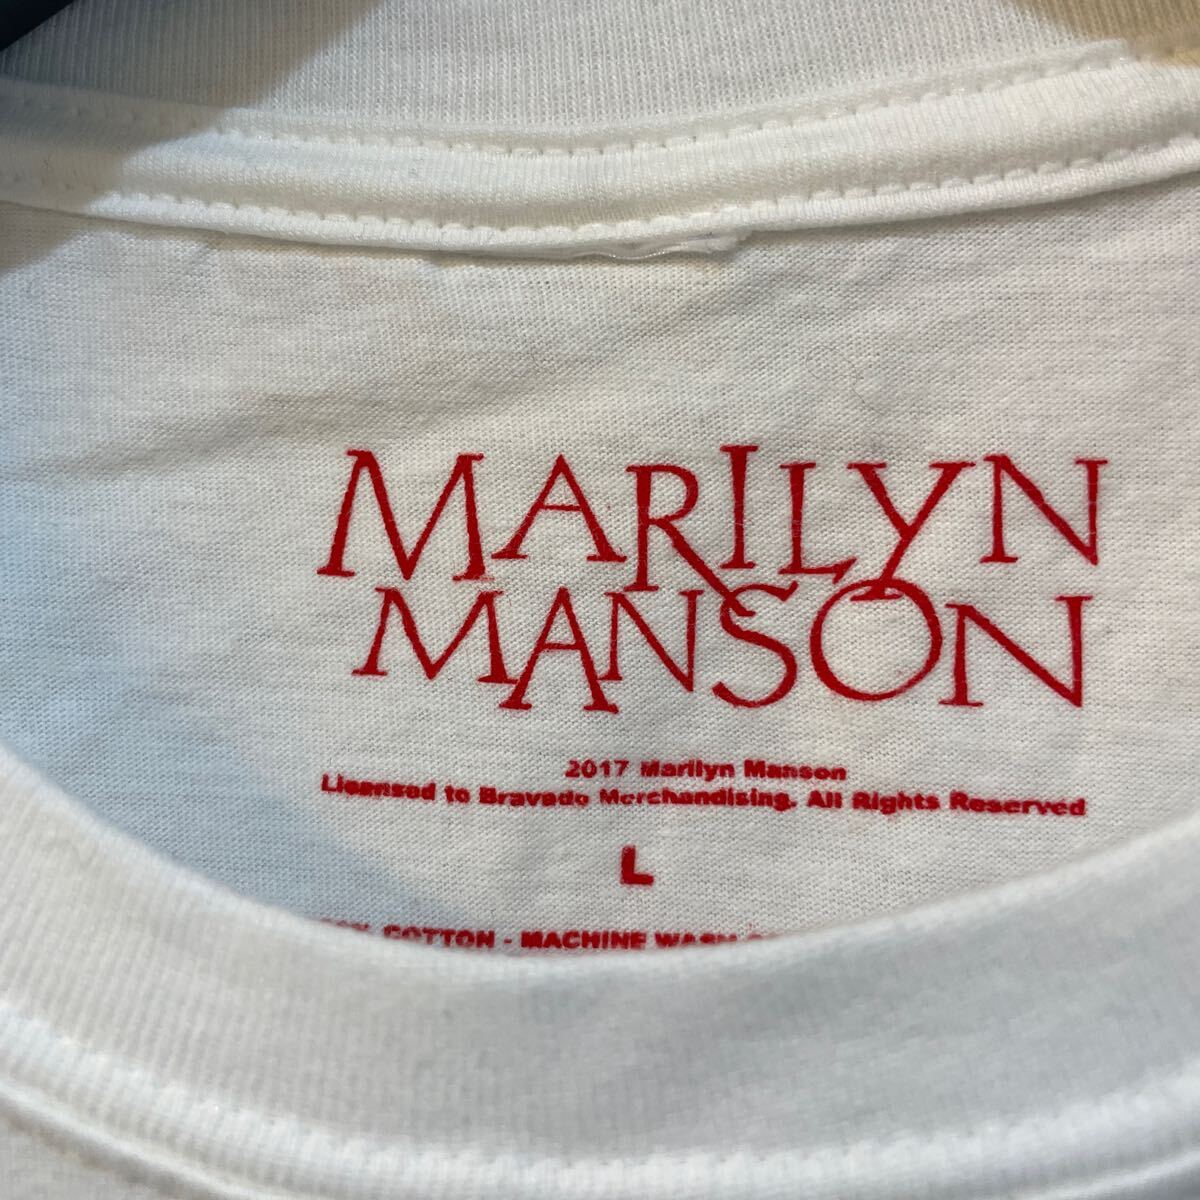  Marilyn Manson частота футболка новый товар не использовался размер L